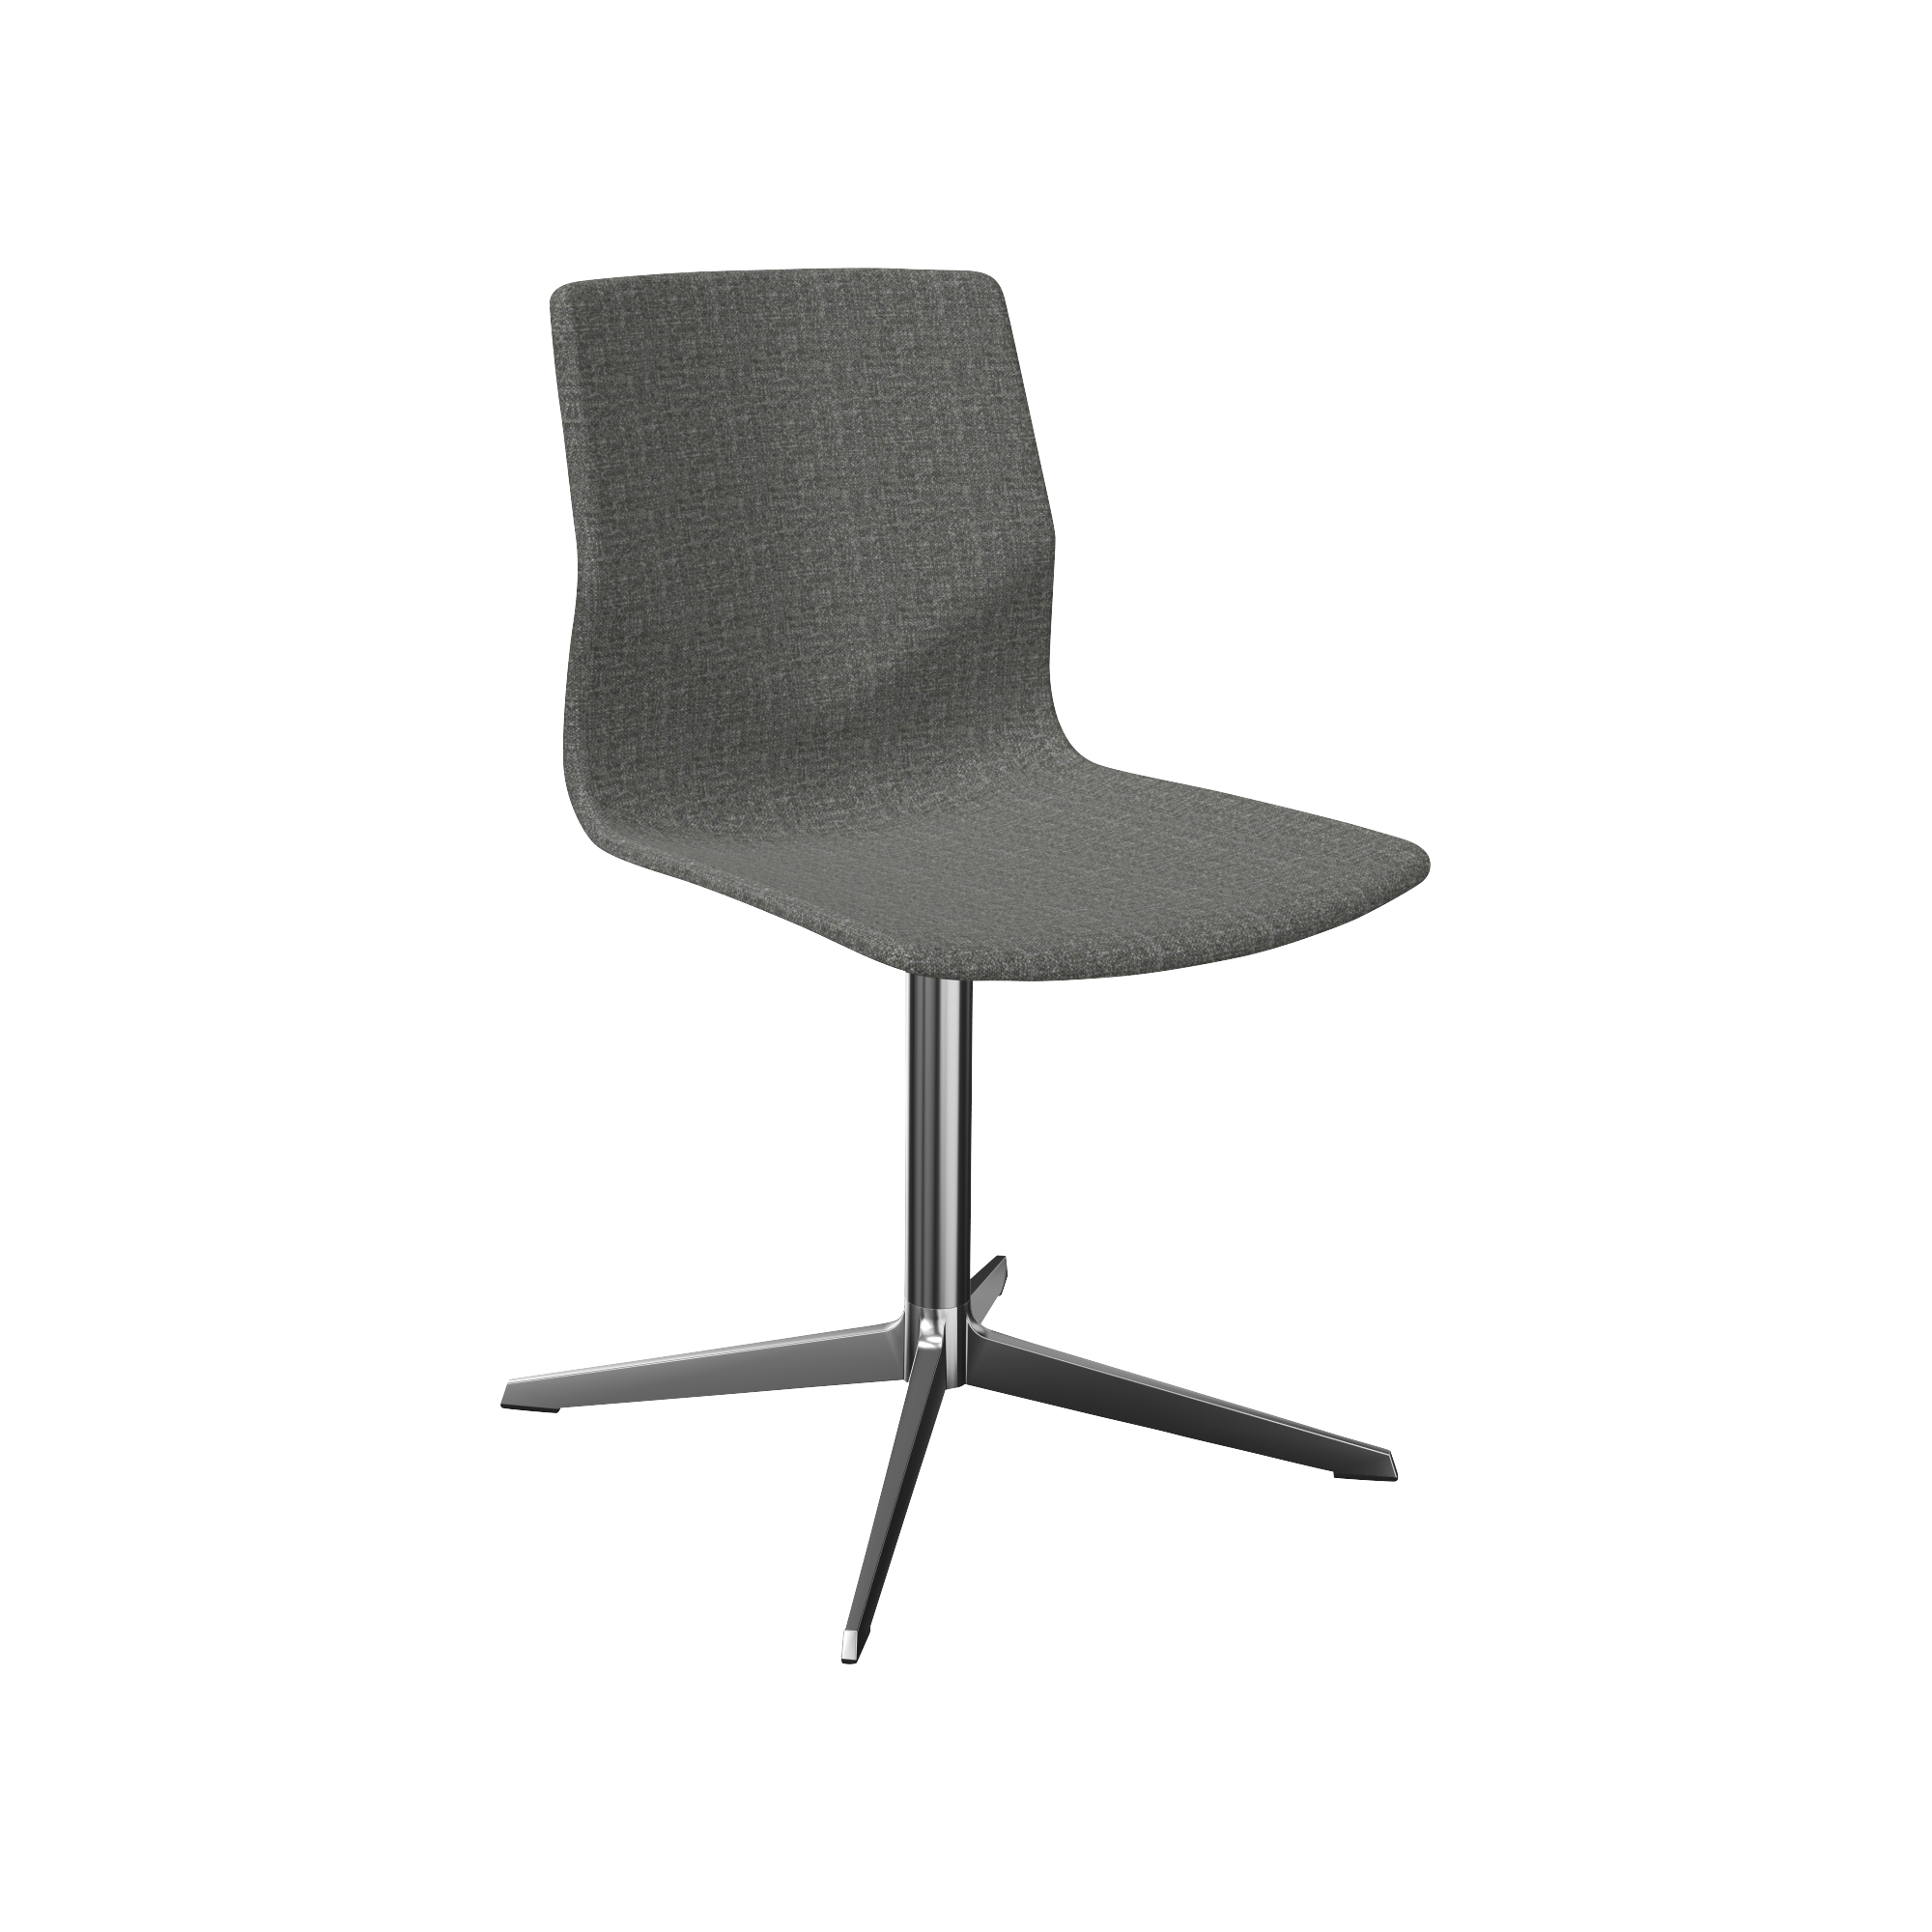 A grey office chair with a chrome pedestal leg